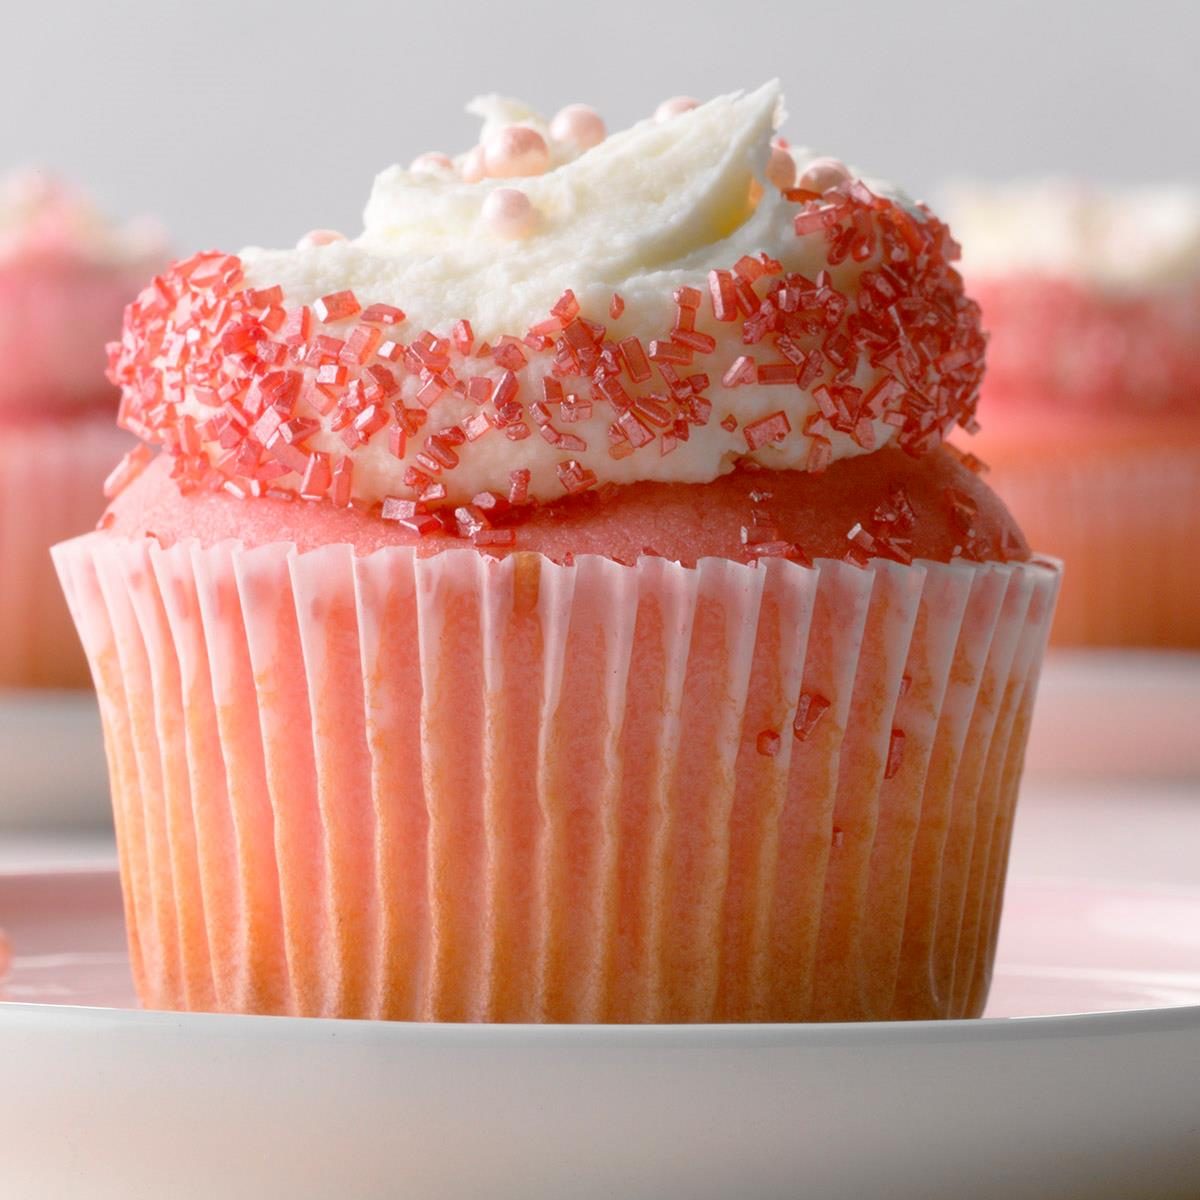 Pink Velvet Cupcakes Recipe: How to Make It